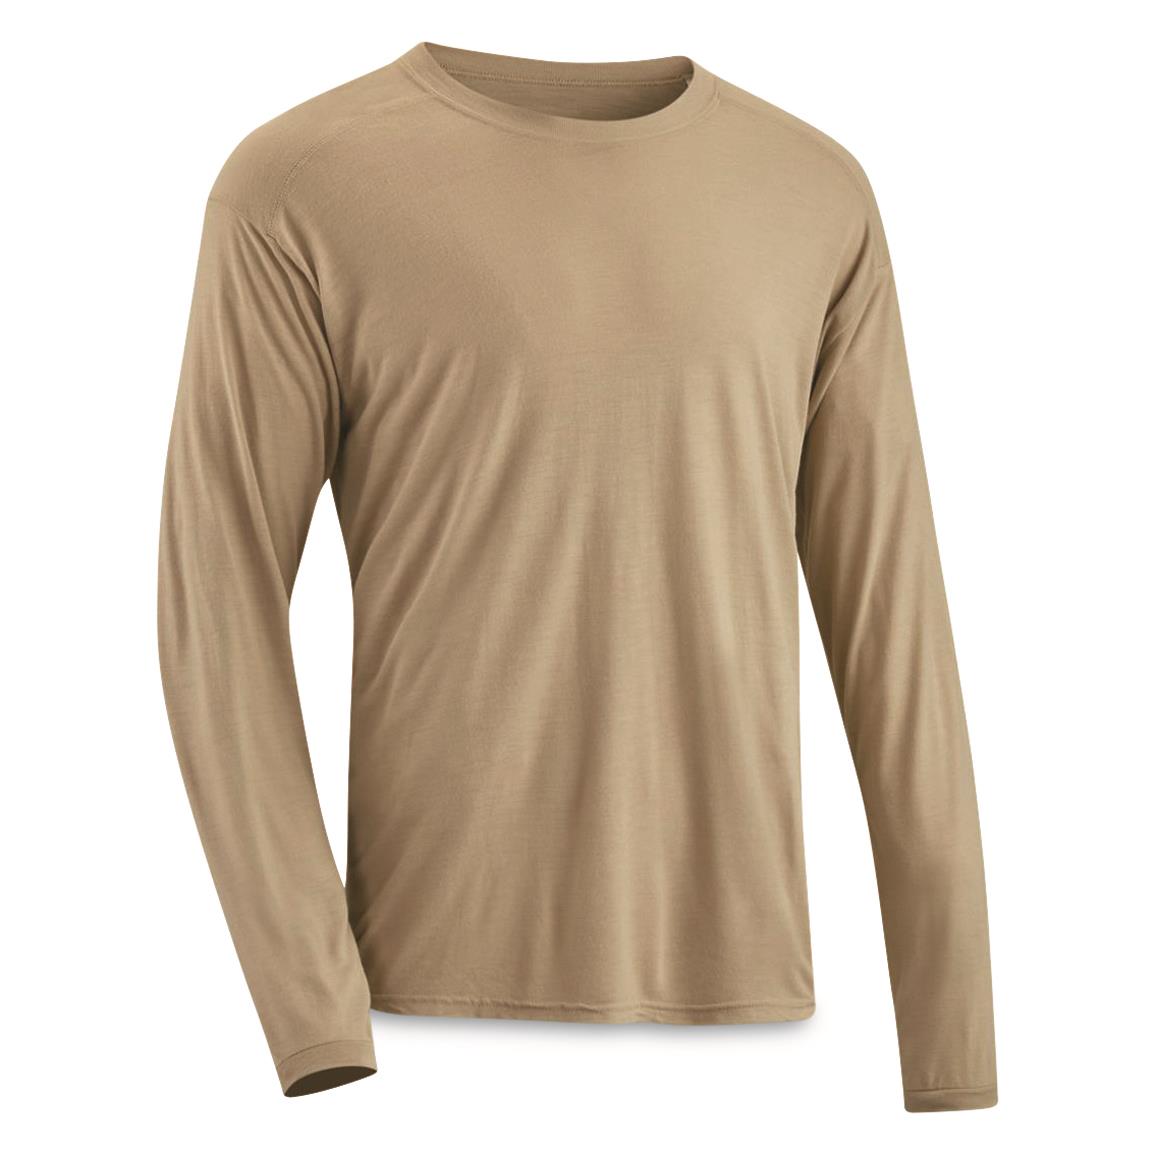 U.S. Military Surplus Polartec SilkWeight Base Layer Shirt, New, Sand